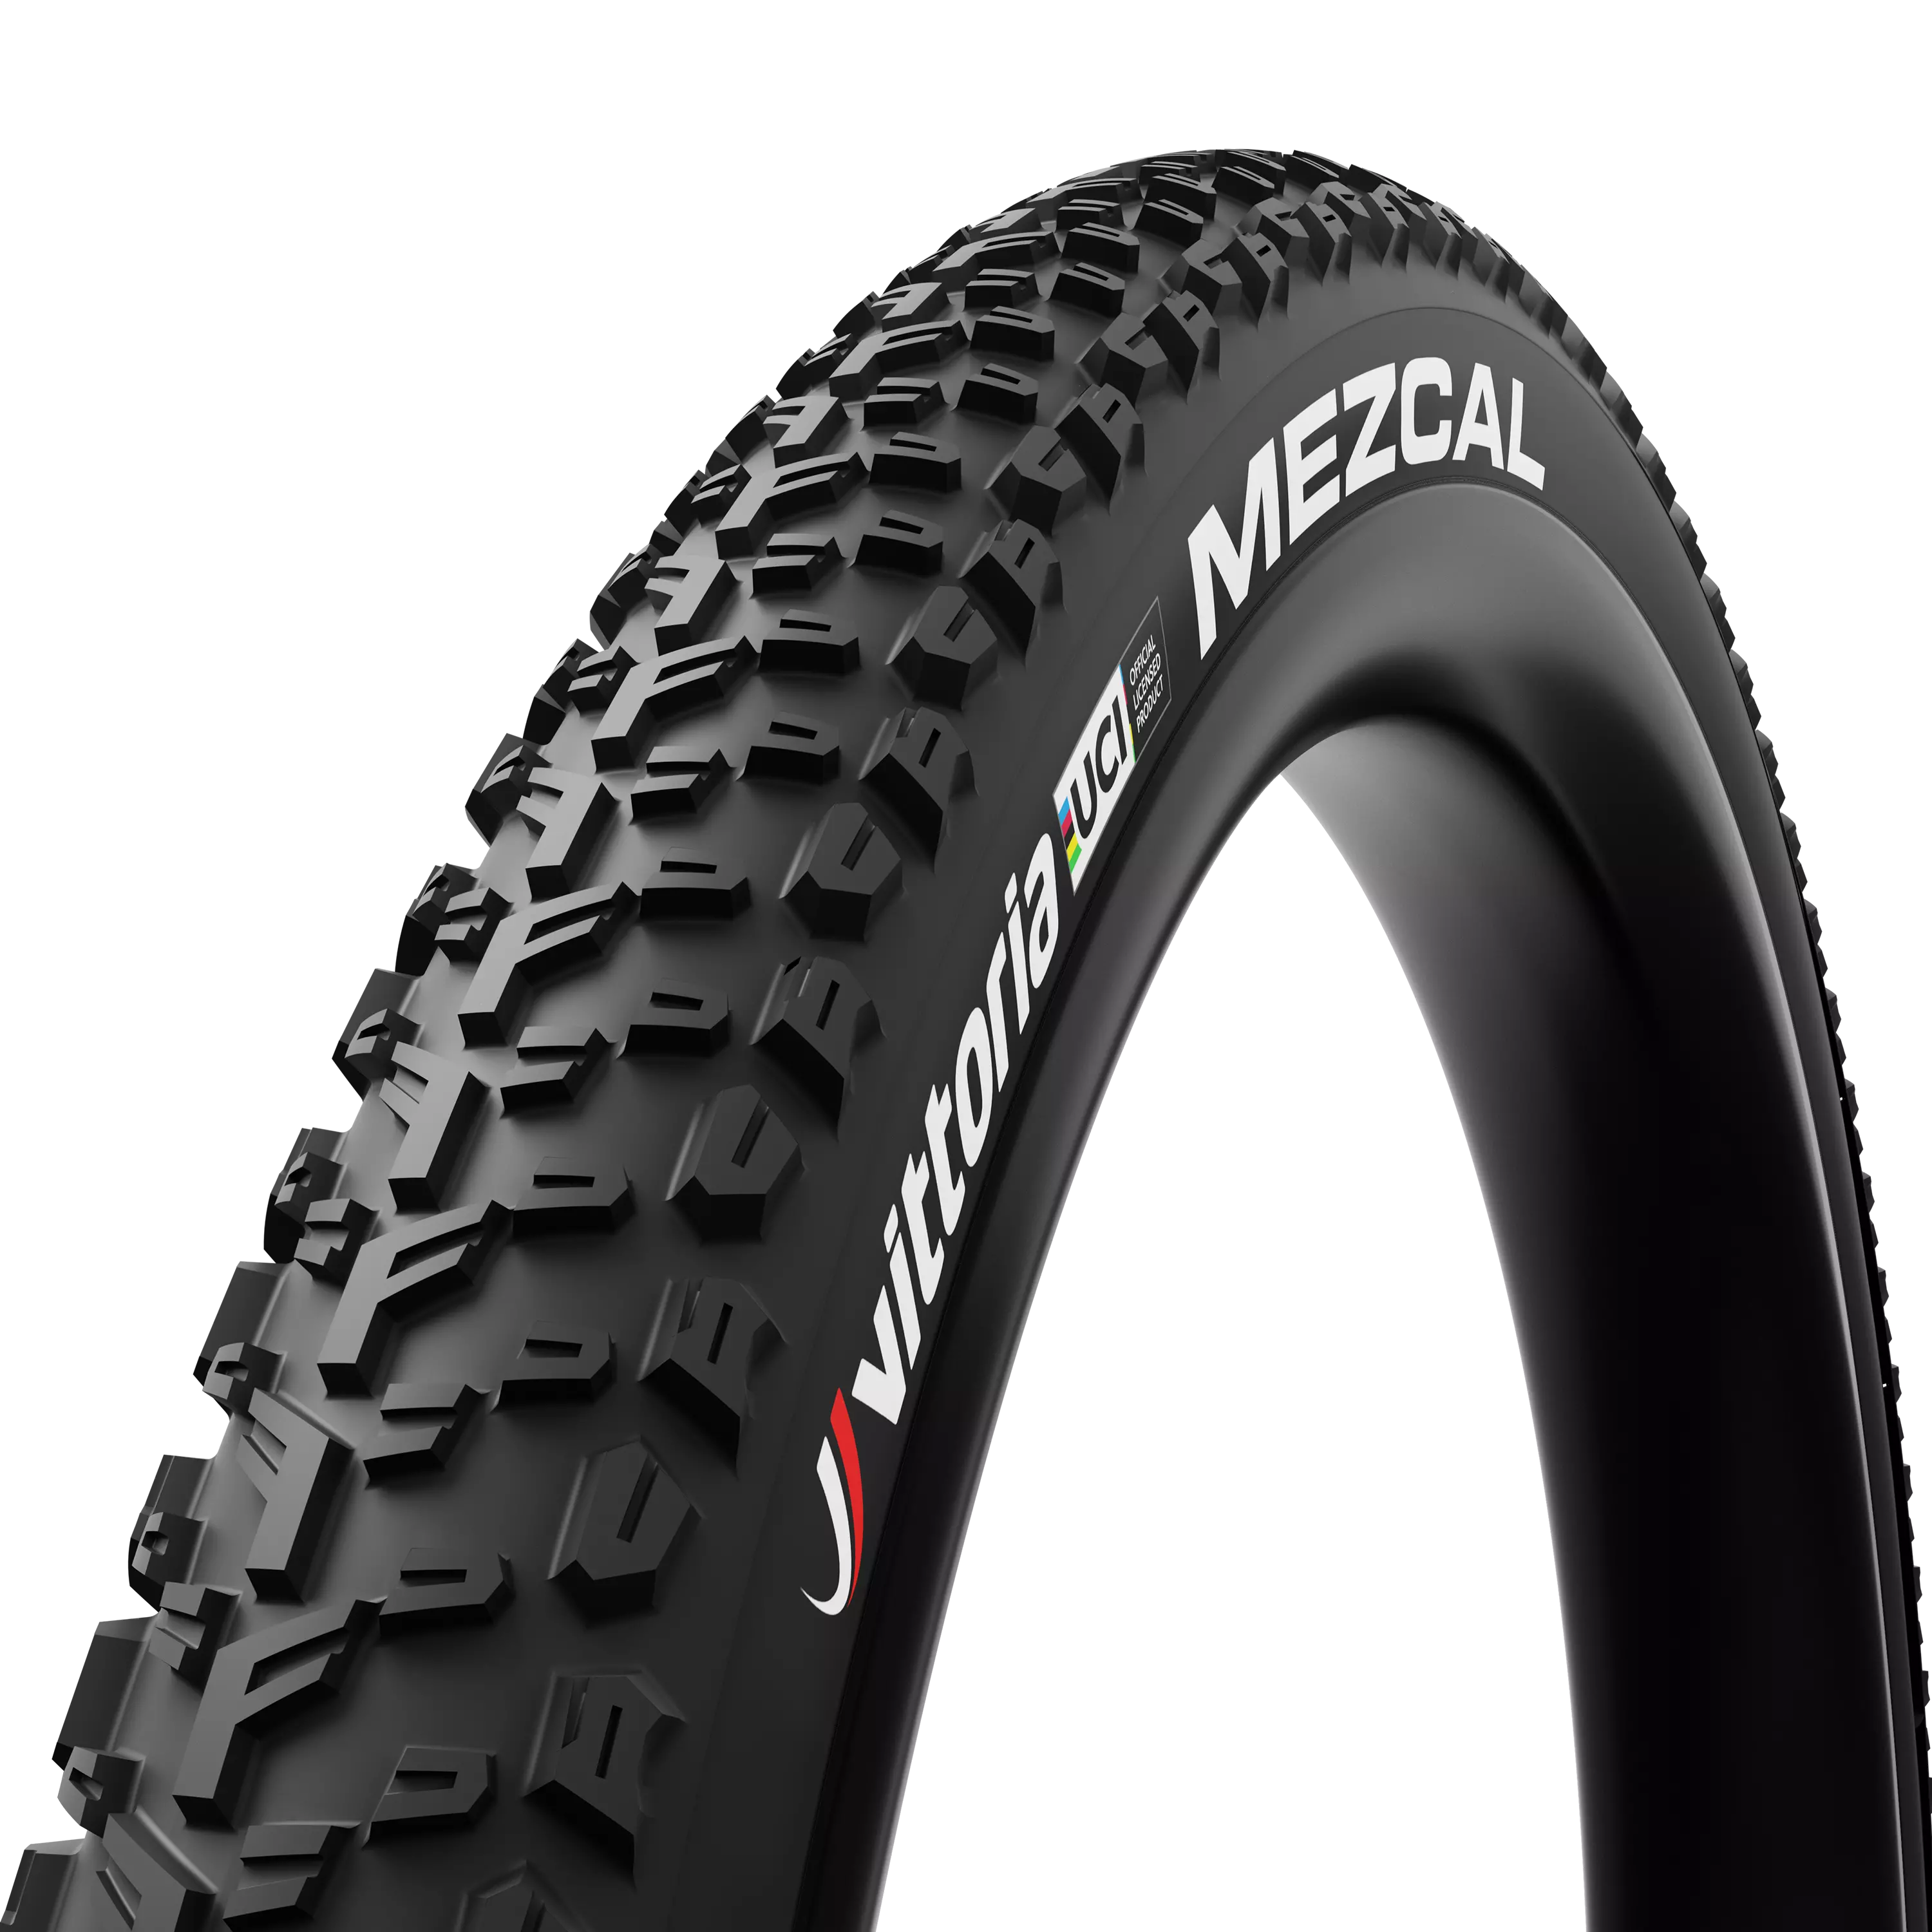 Mezcal XC UCI-licensed Edition